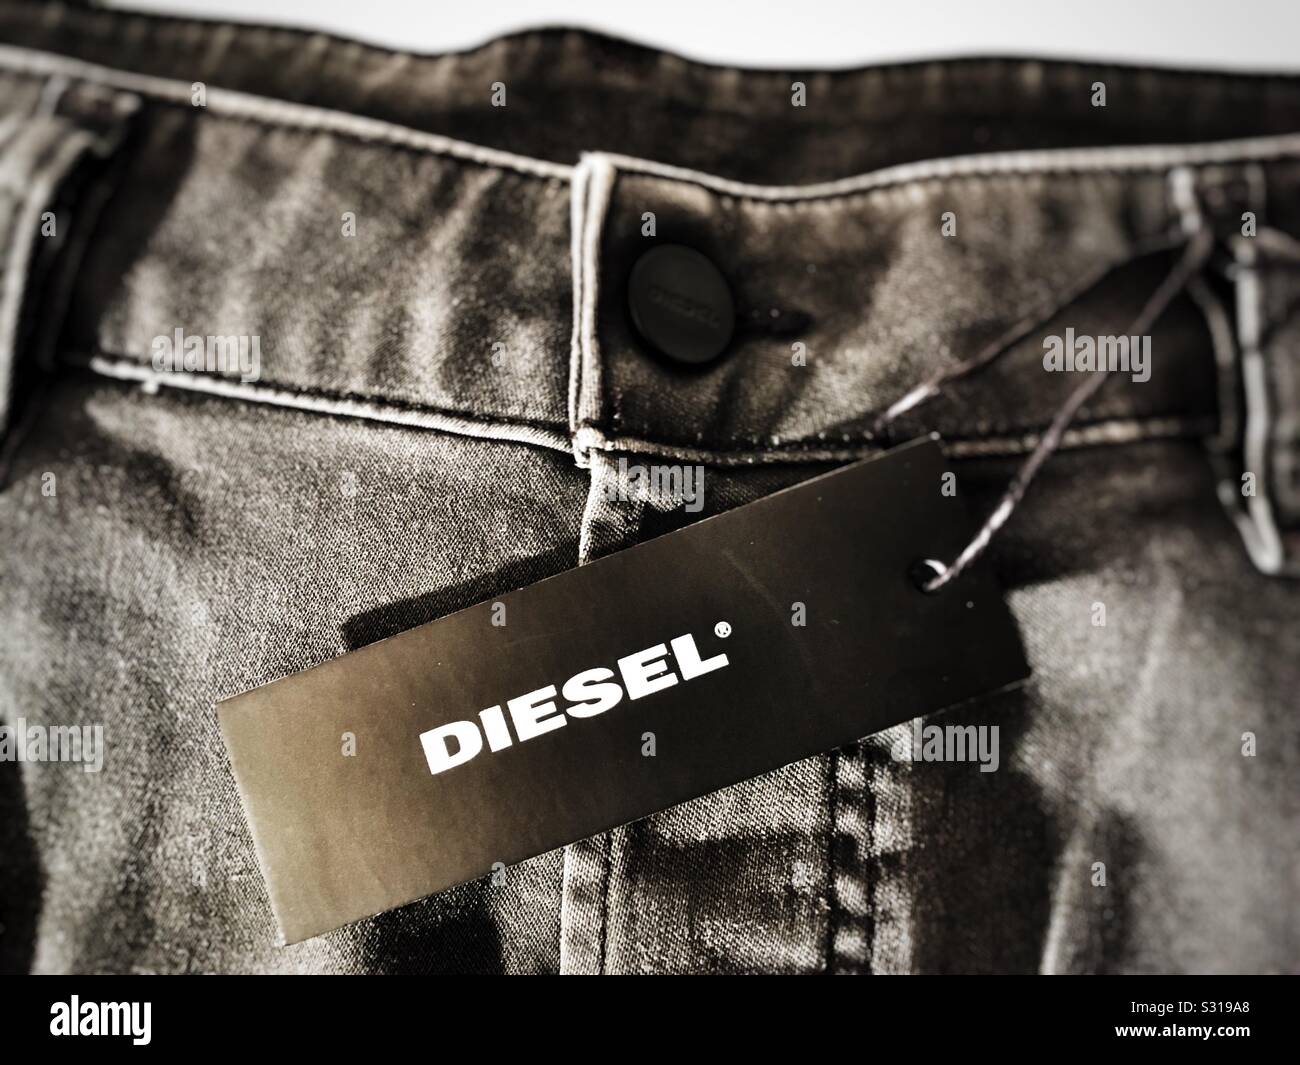 diesel ultra soft jeans